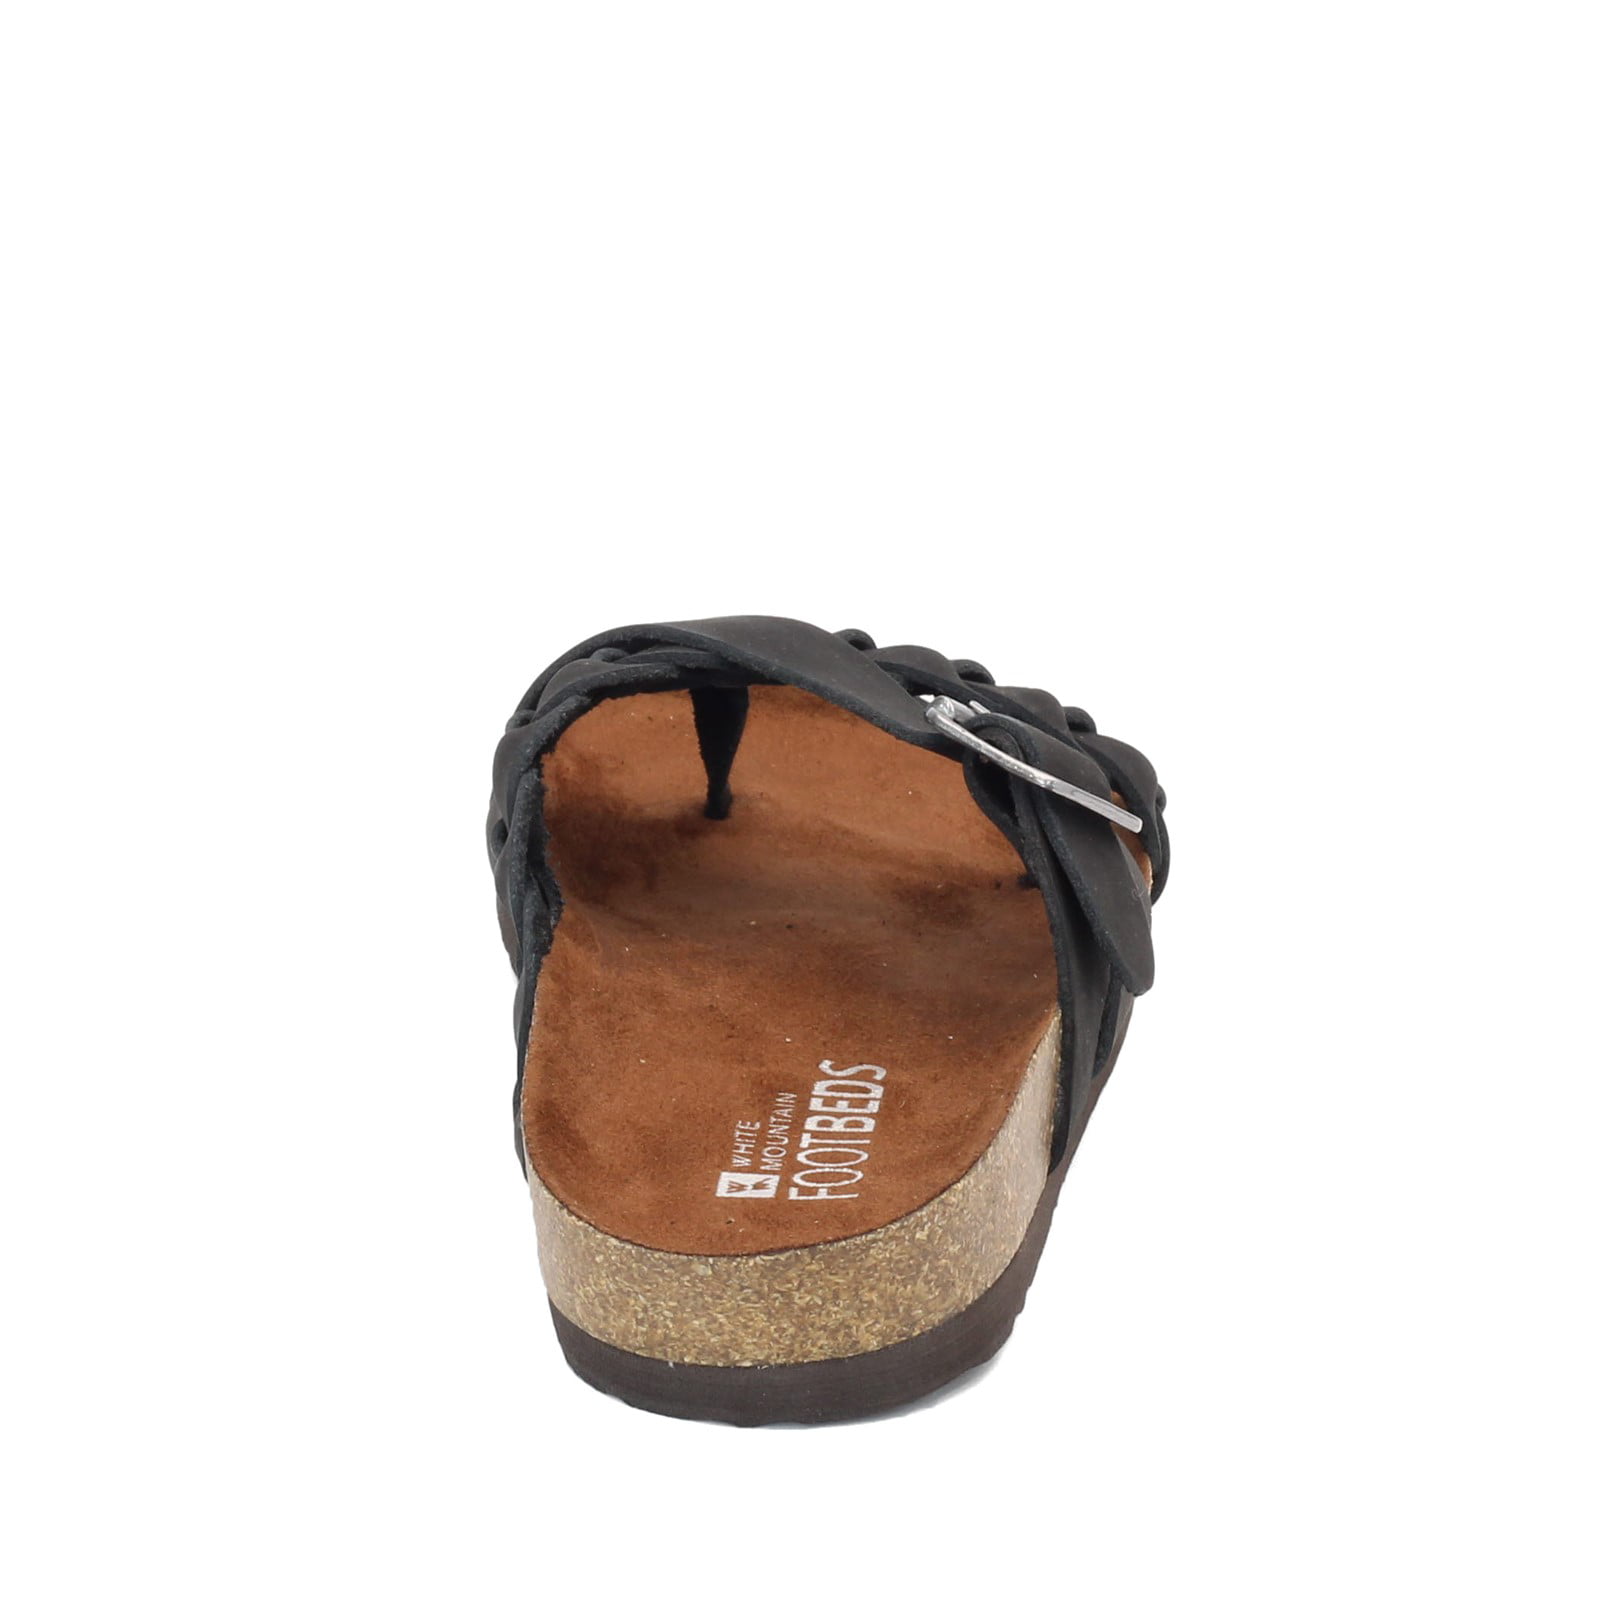 Buy > white mountain women's harrington leather footbed sandal > in stock